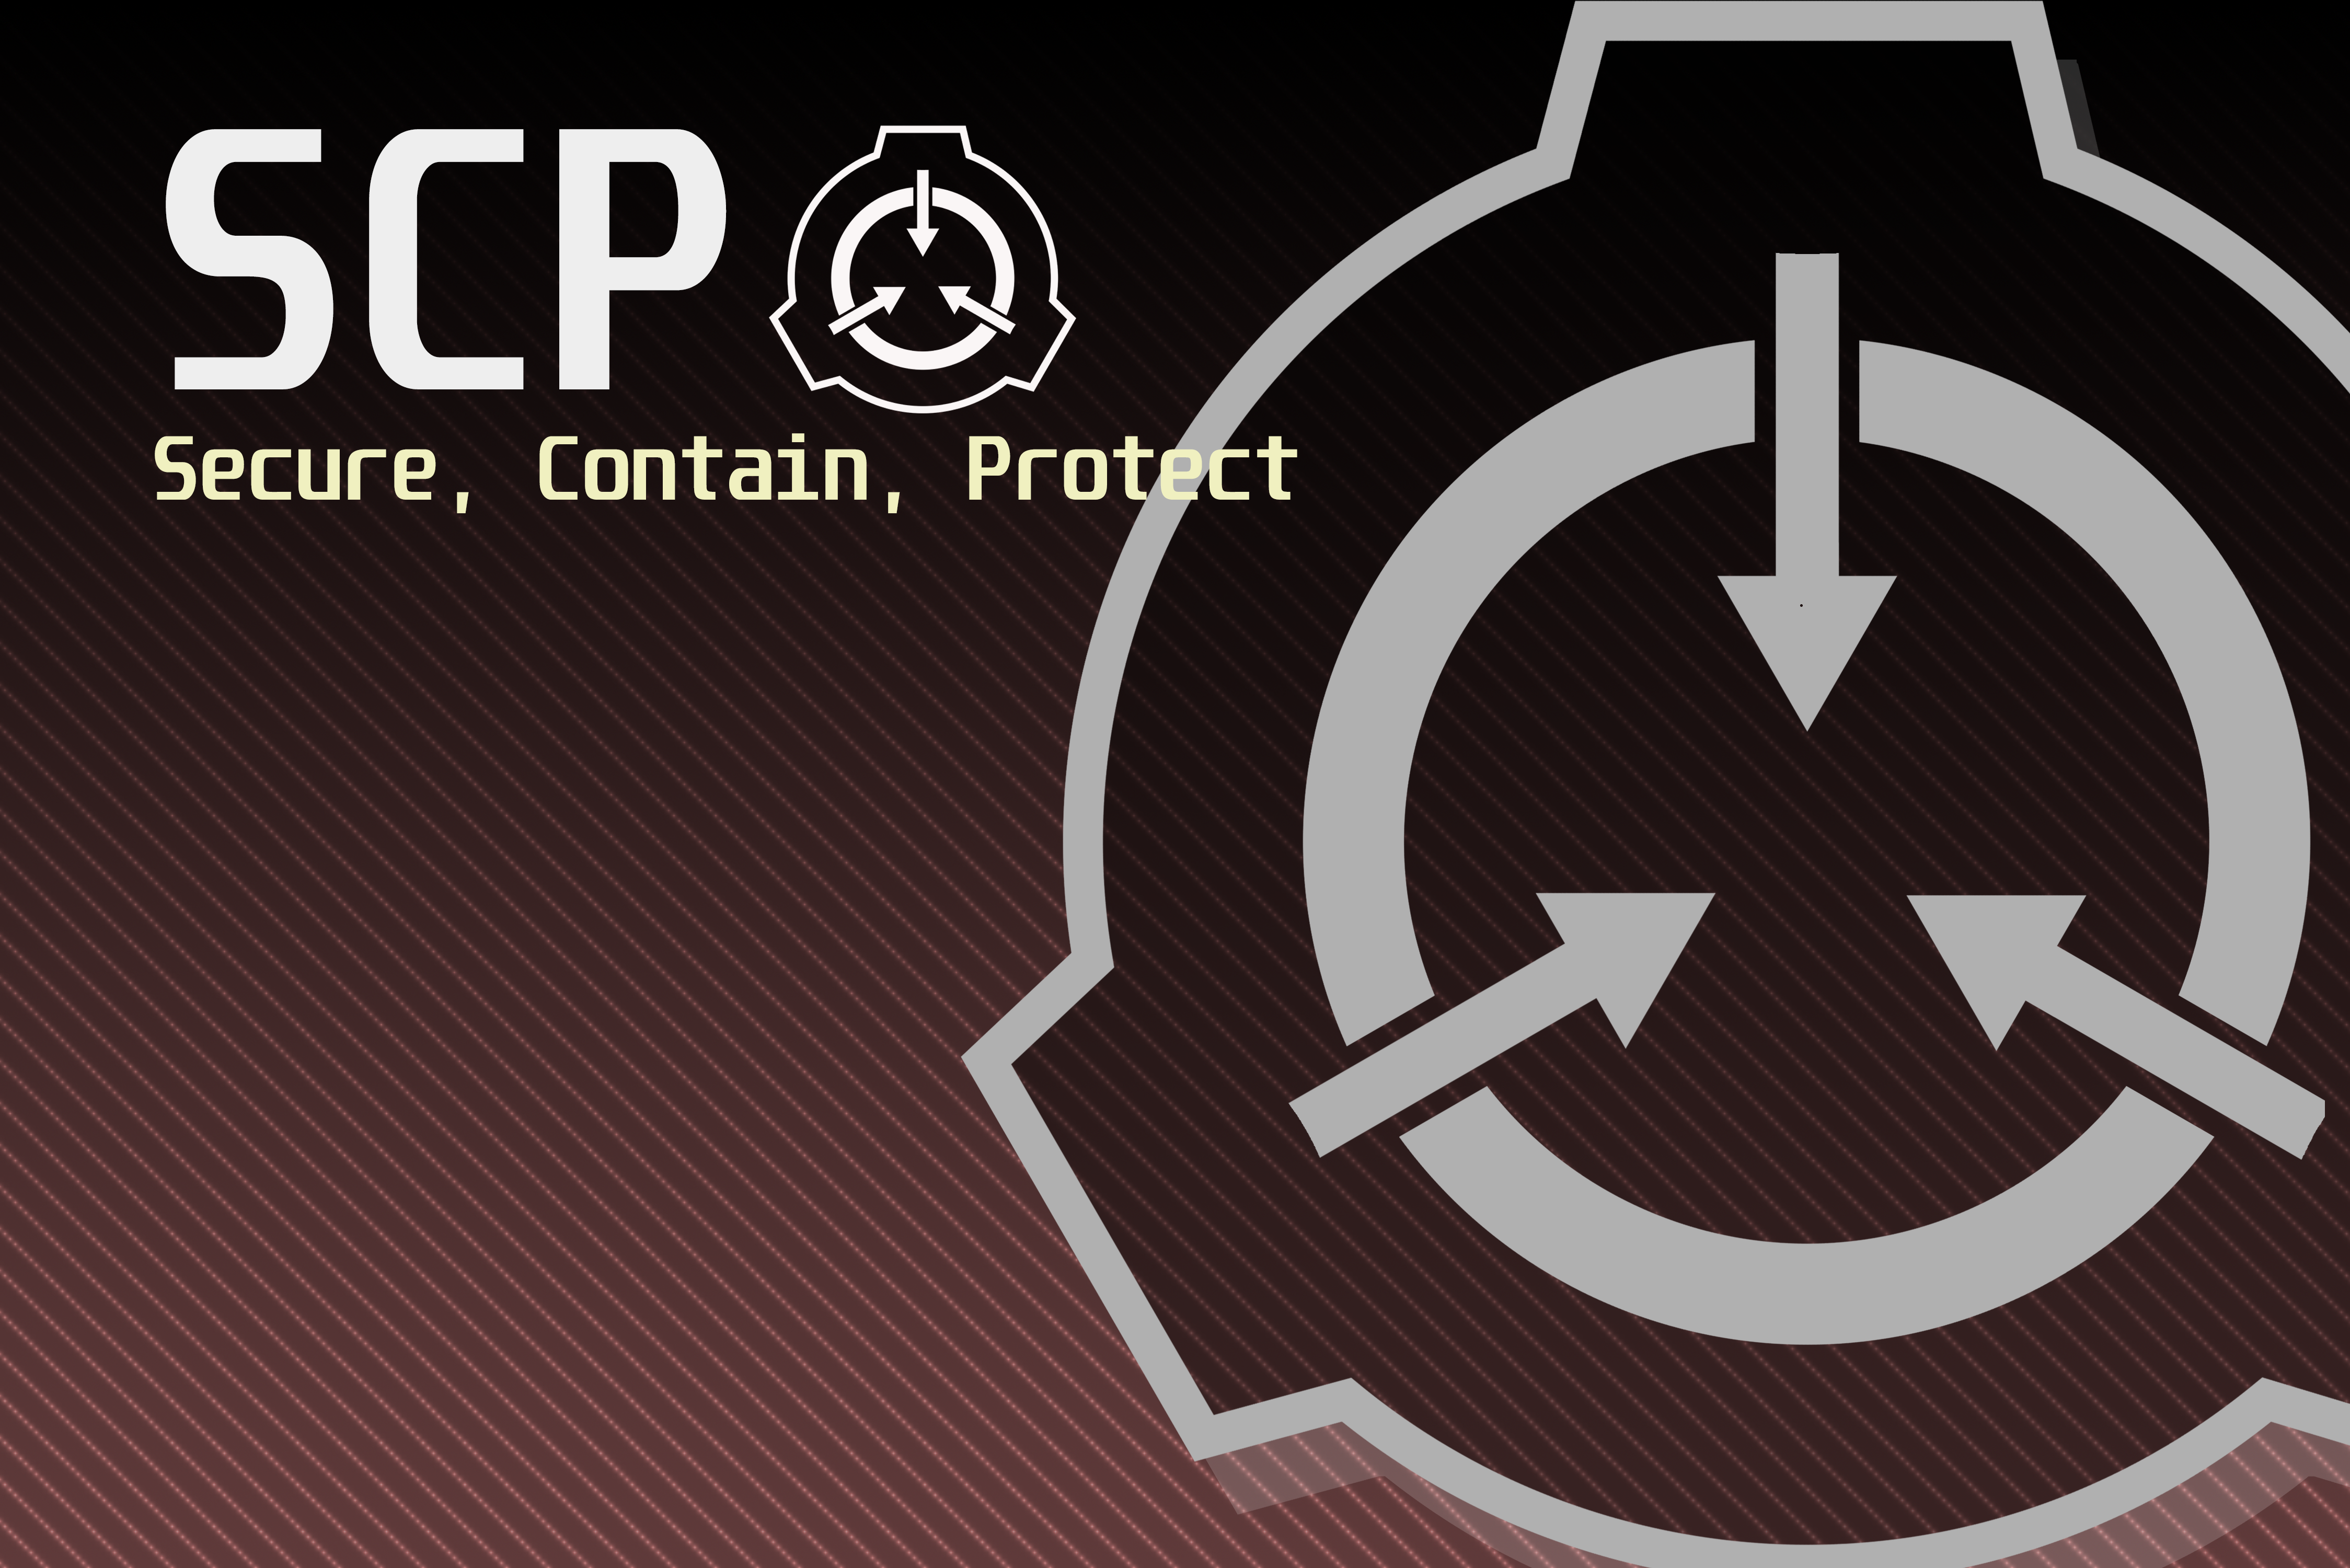 Скачай игру scp фонд. SCP фонд. SCP логотип. Логотип фонда SCP. SCP фонд обои.